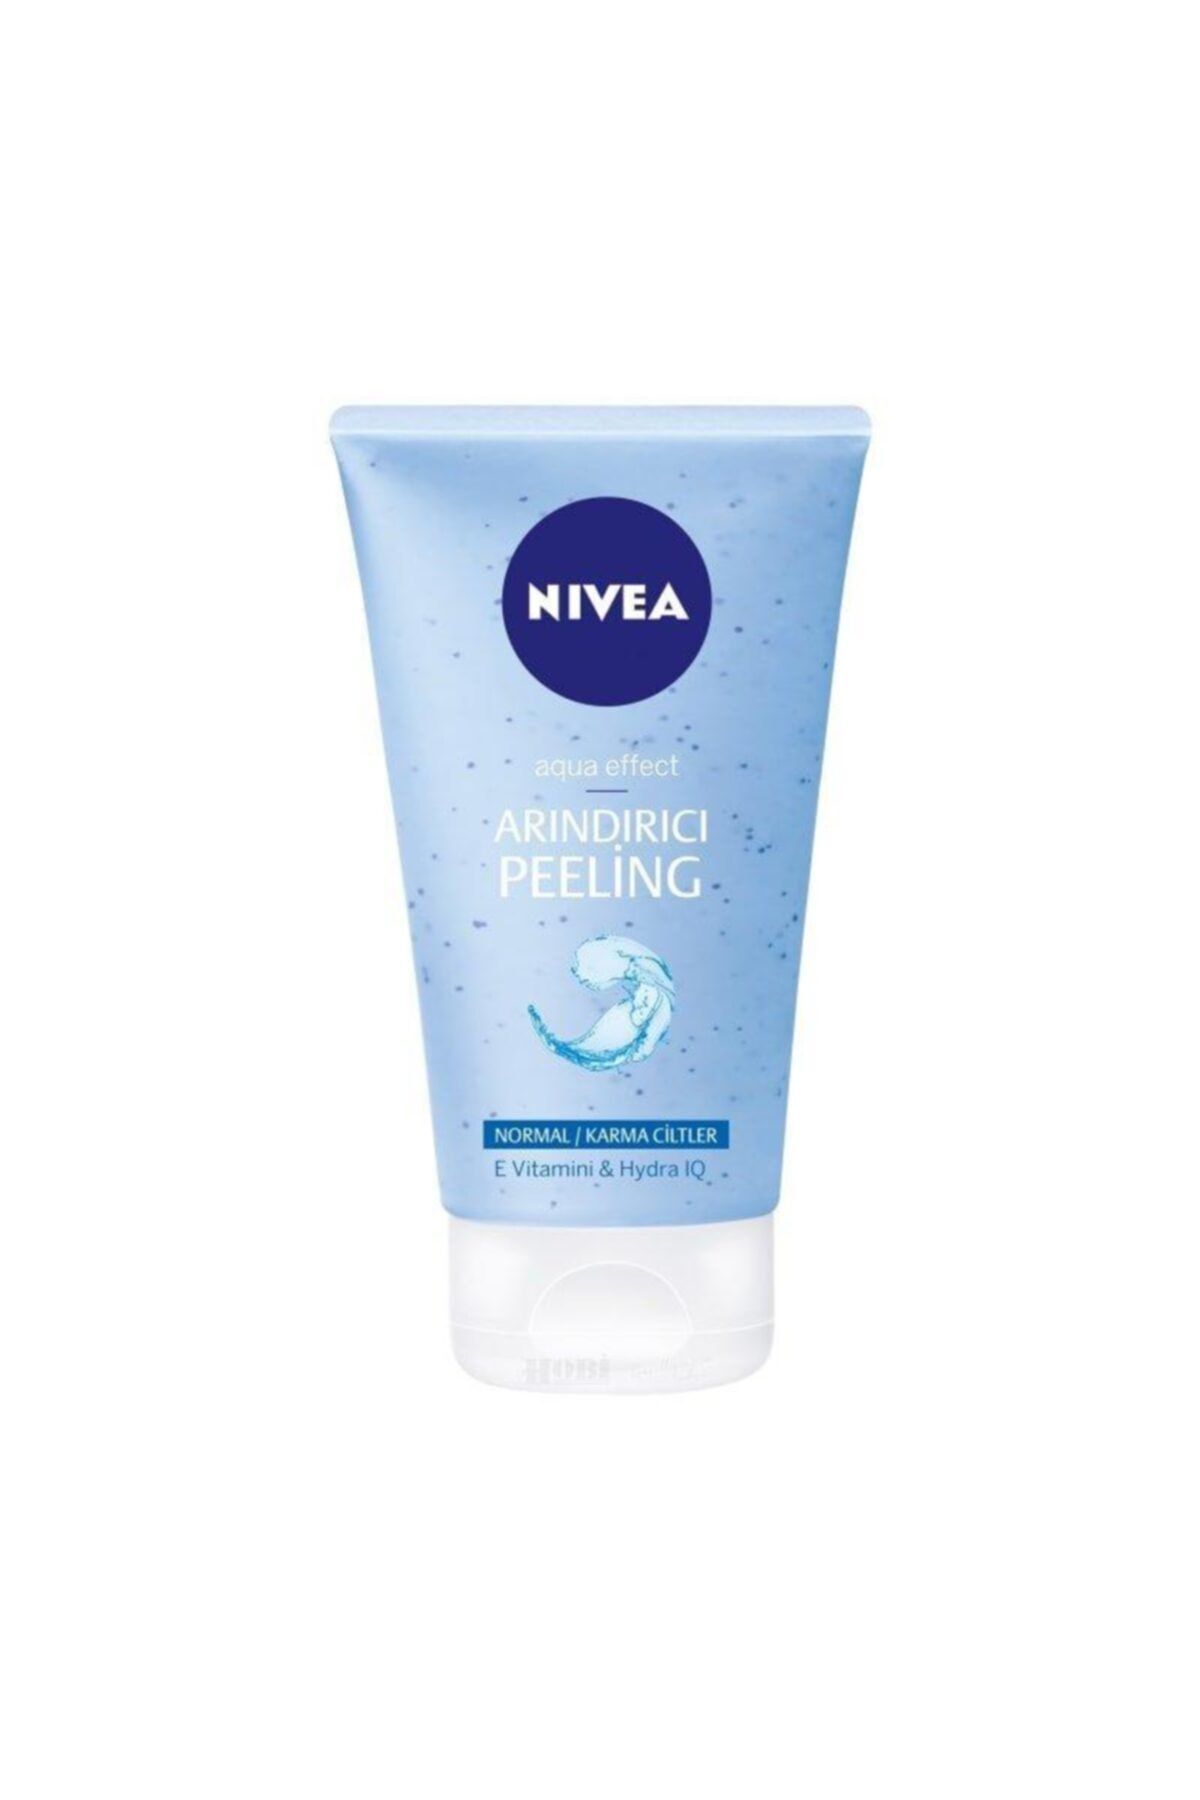 NIVEA Arındırıcı Peeling E Vitaminli & Hydra Iq 150 ml